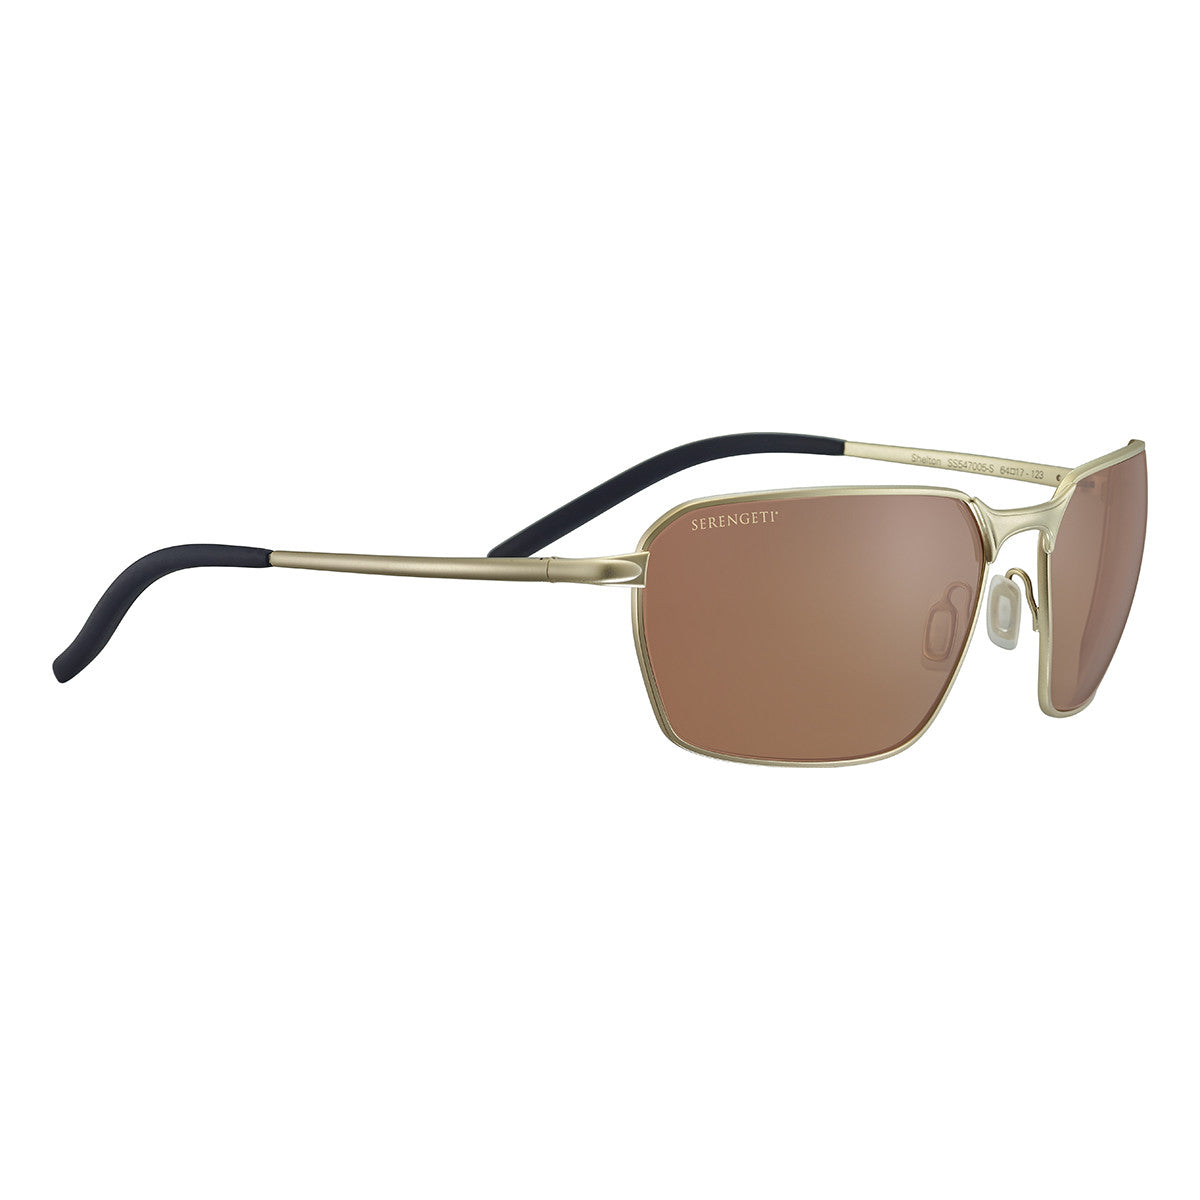 Serengeti Shelton Sunglasses  Matte Light Gold Medium, Large